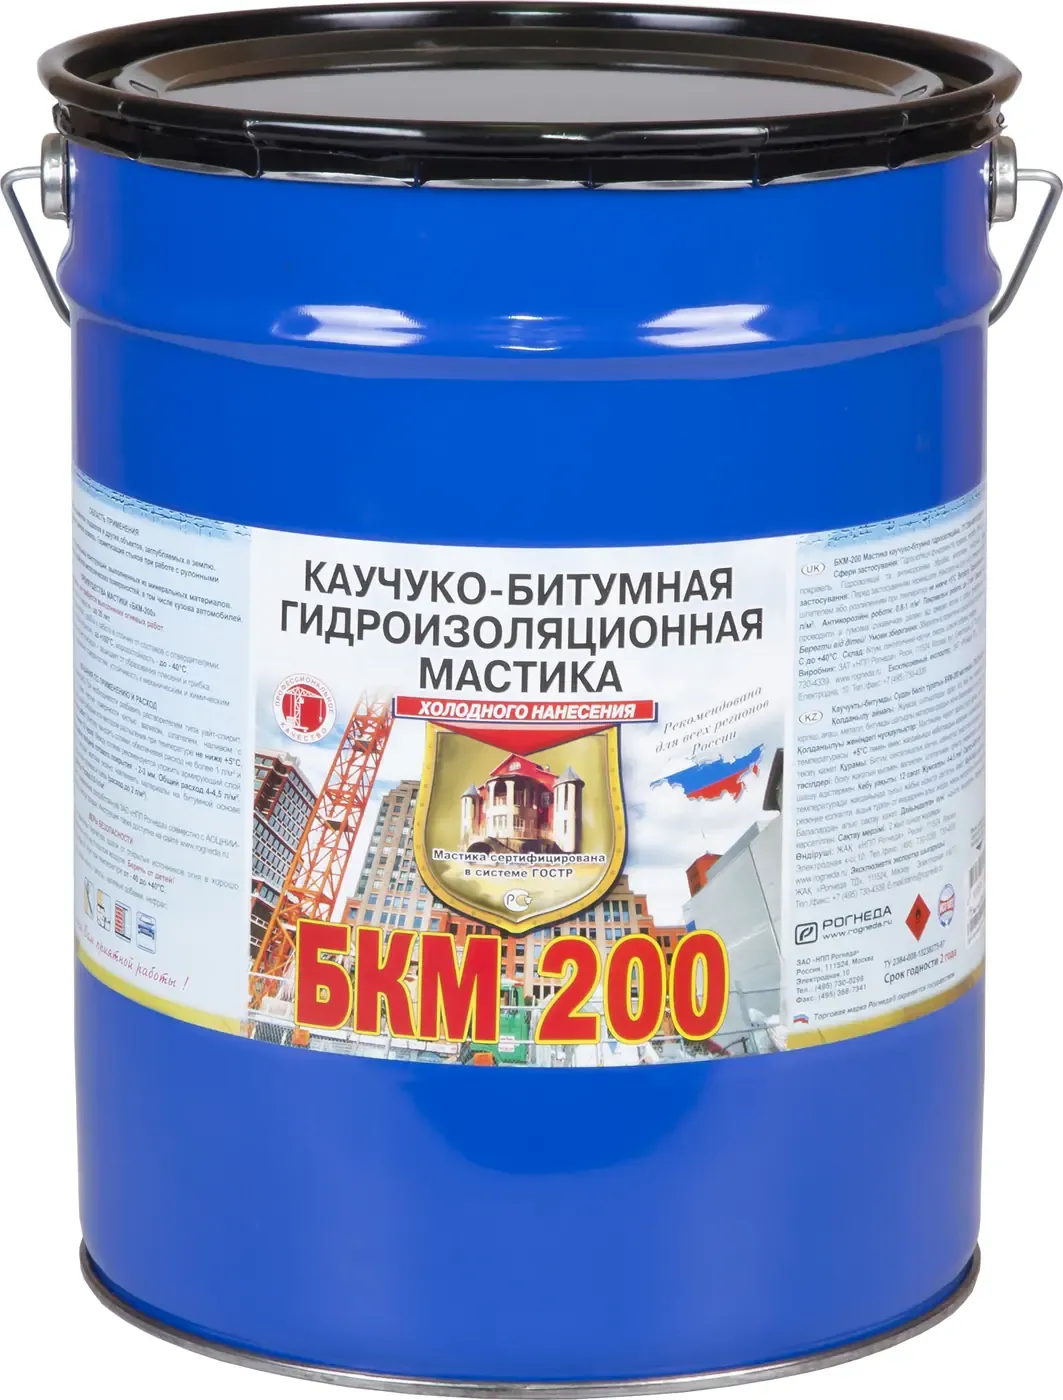 Каучуко битумная гидроизоляционная мастика Рогнеда БКМ 200 20 кг